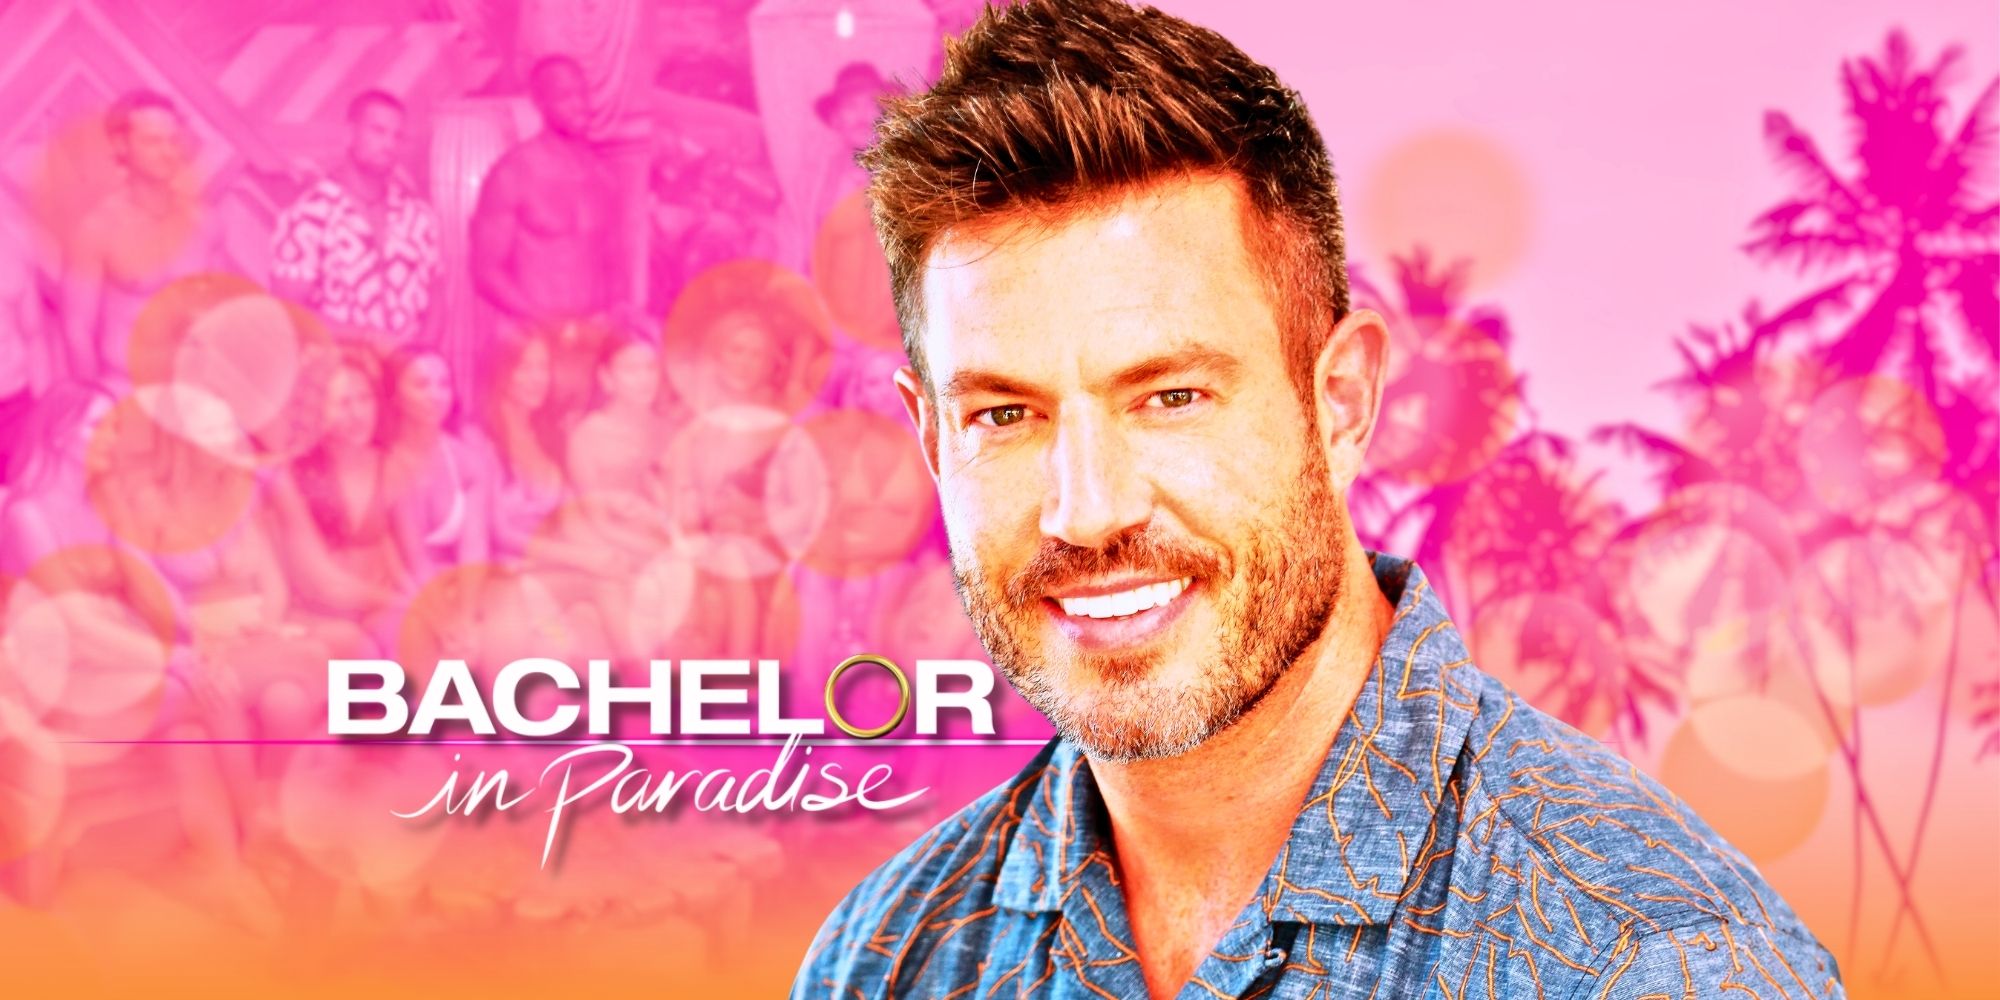 Bachelor in Paradise' Season 9: Cast, Premiere Date, Rumors & More